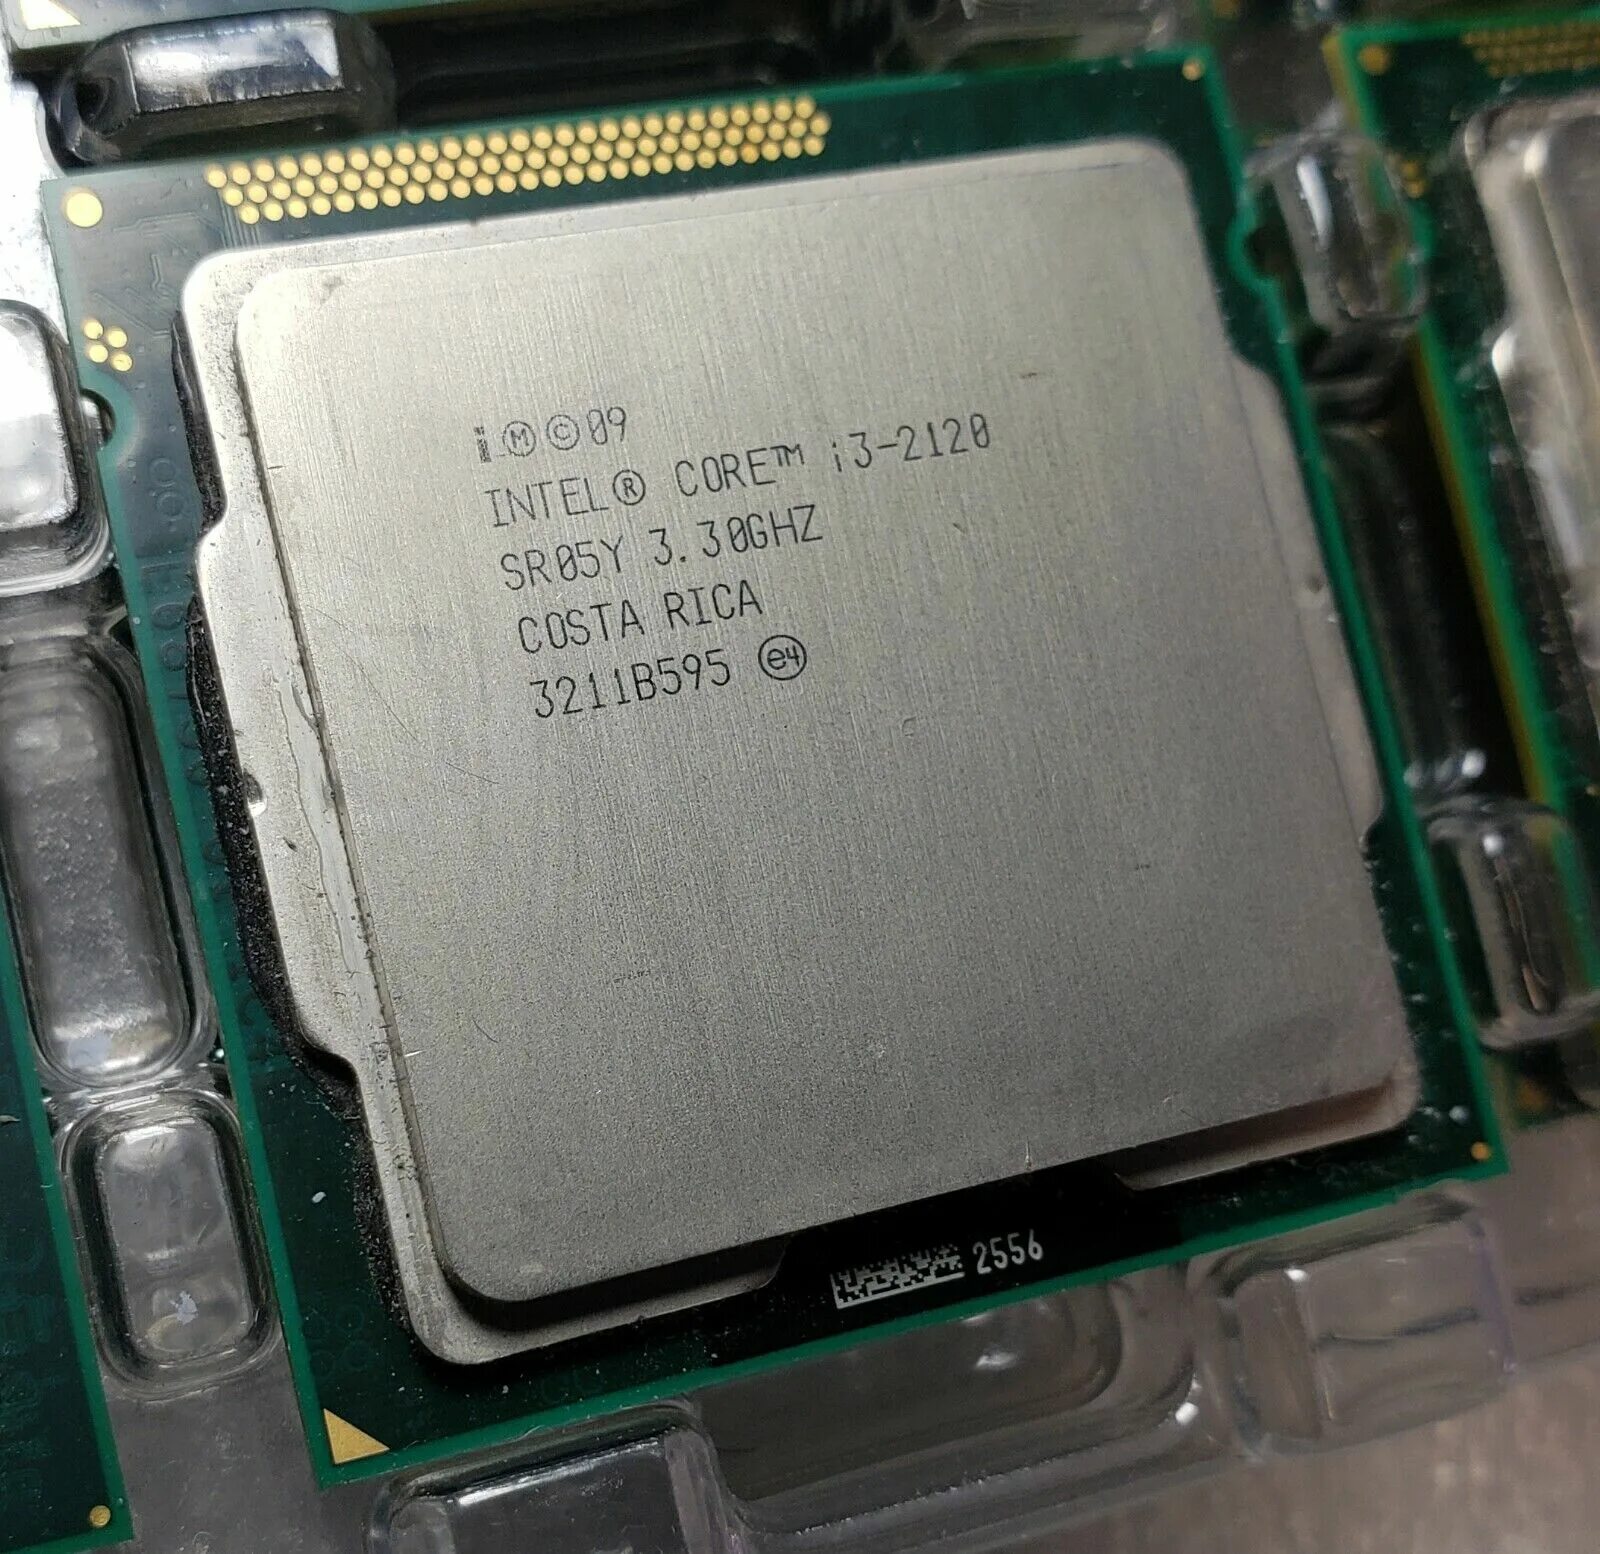 Intel i3 какой сокет. Процессор Intel Core i3 1155. Интел i3 2120. Intel® Core™ i3-2120. Core i3 2120 3.3GHZ.